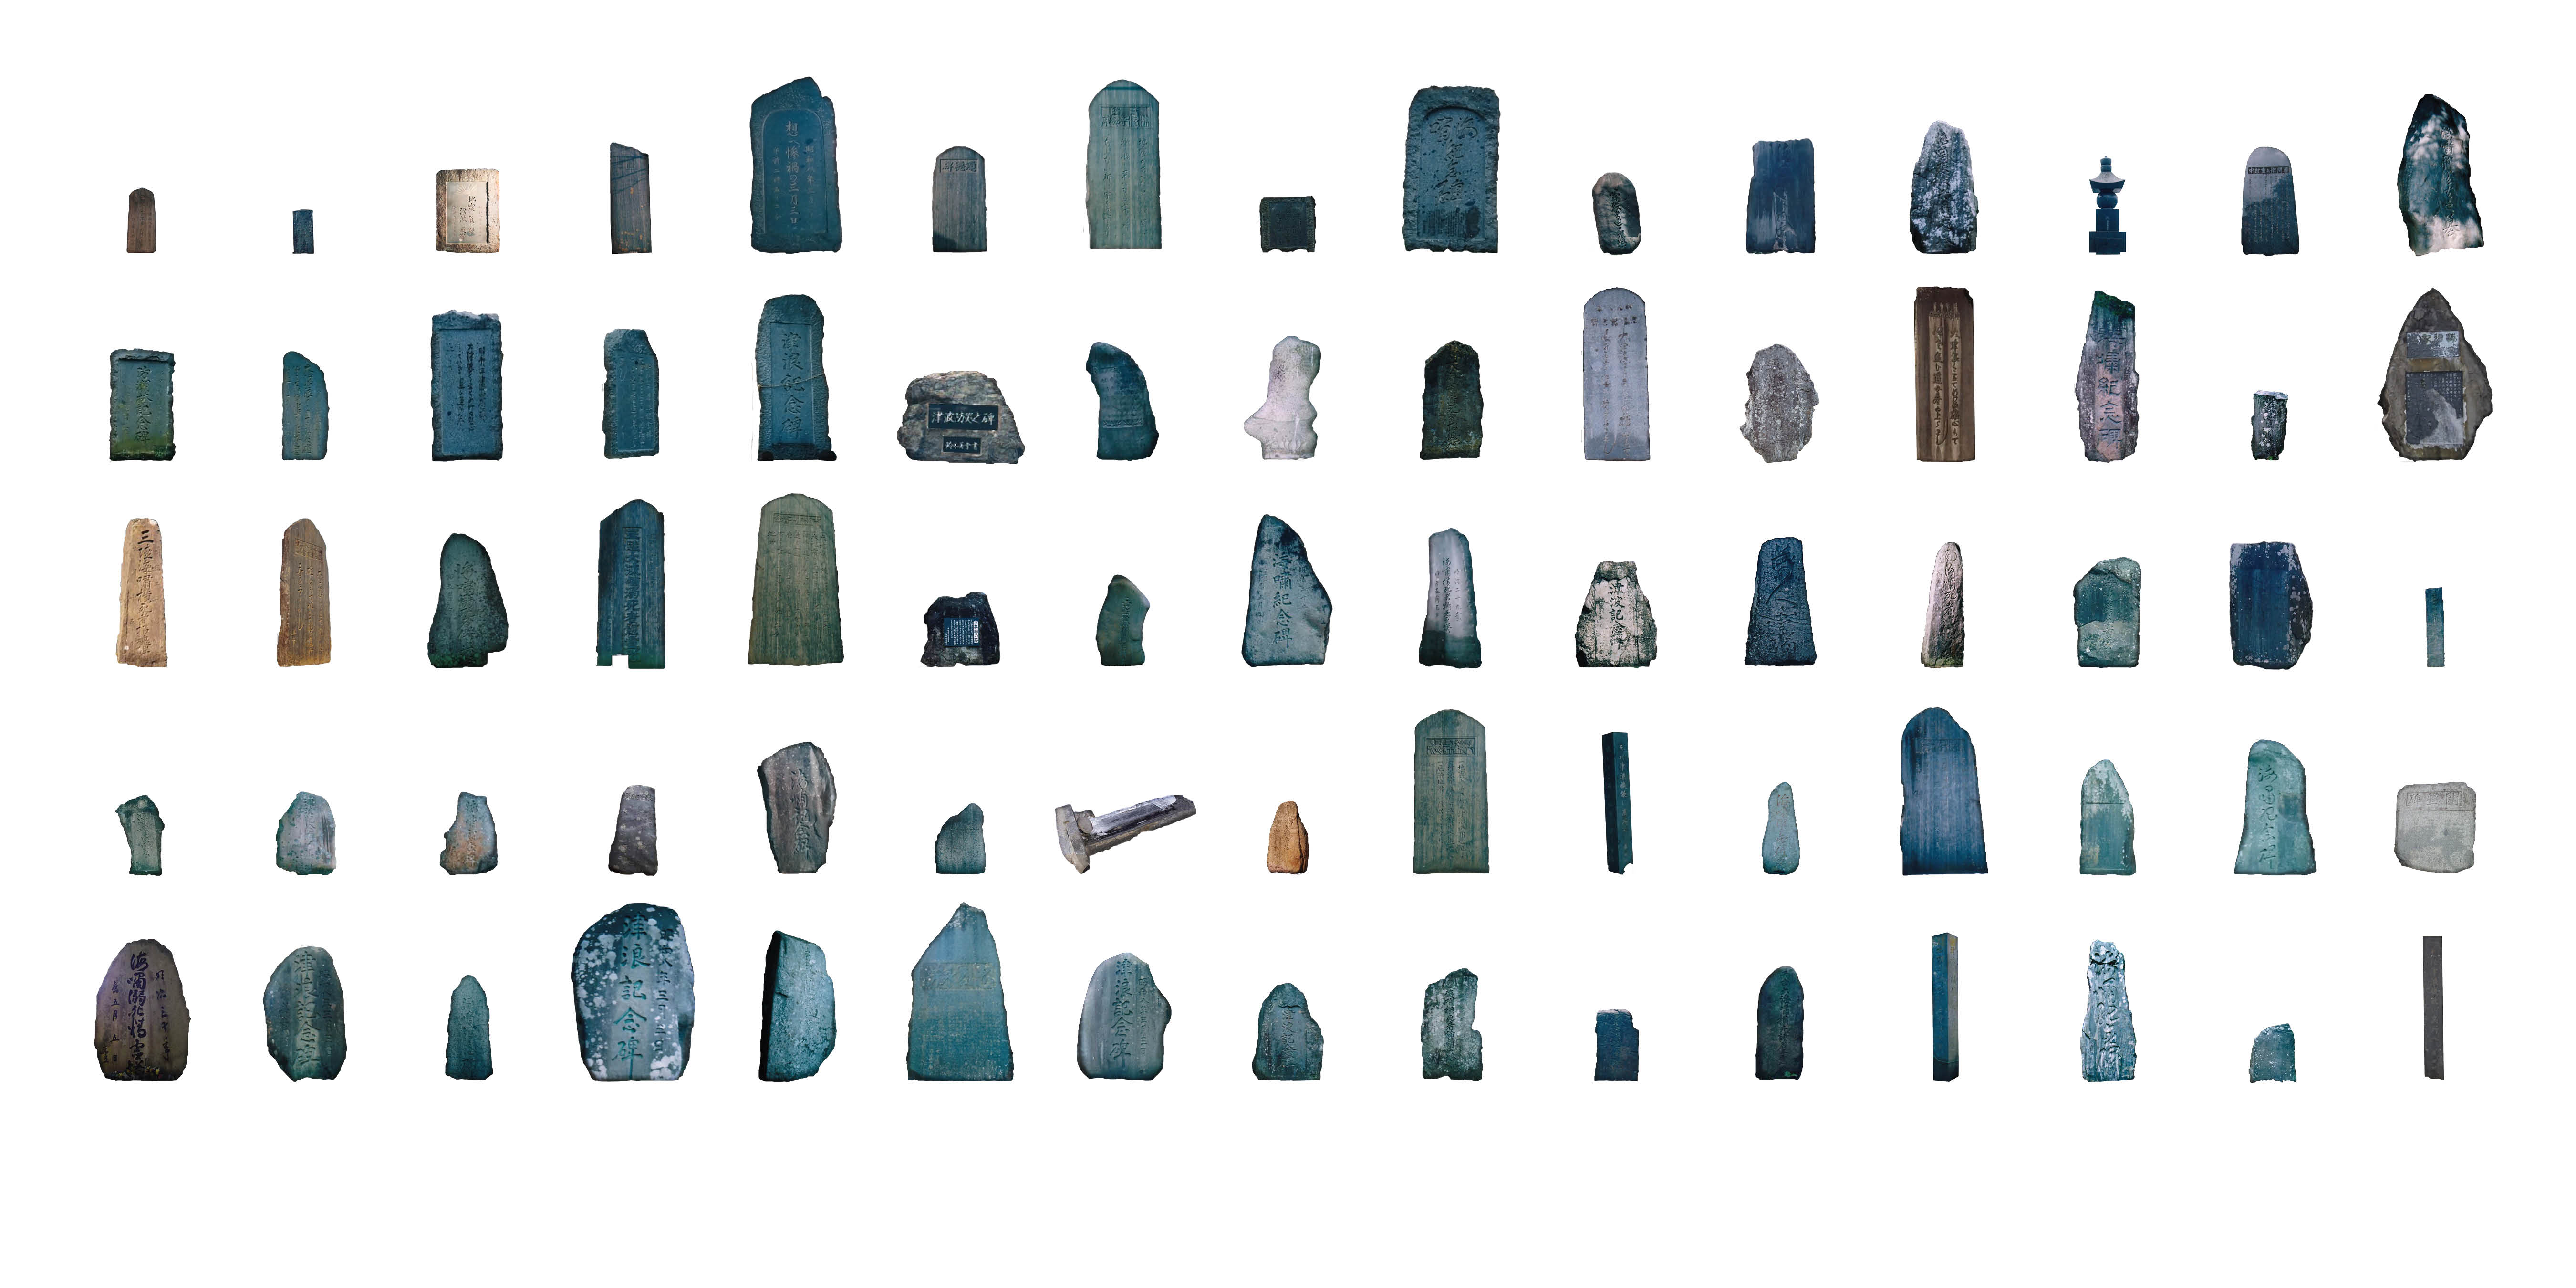 Elise Hunchuck's "An Incomplete Atlas of Stones" artwork